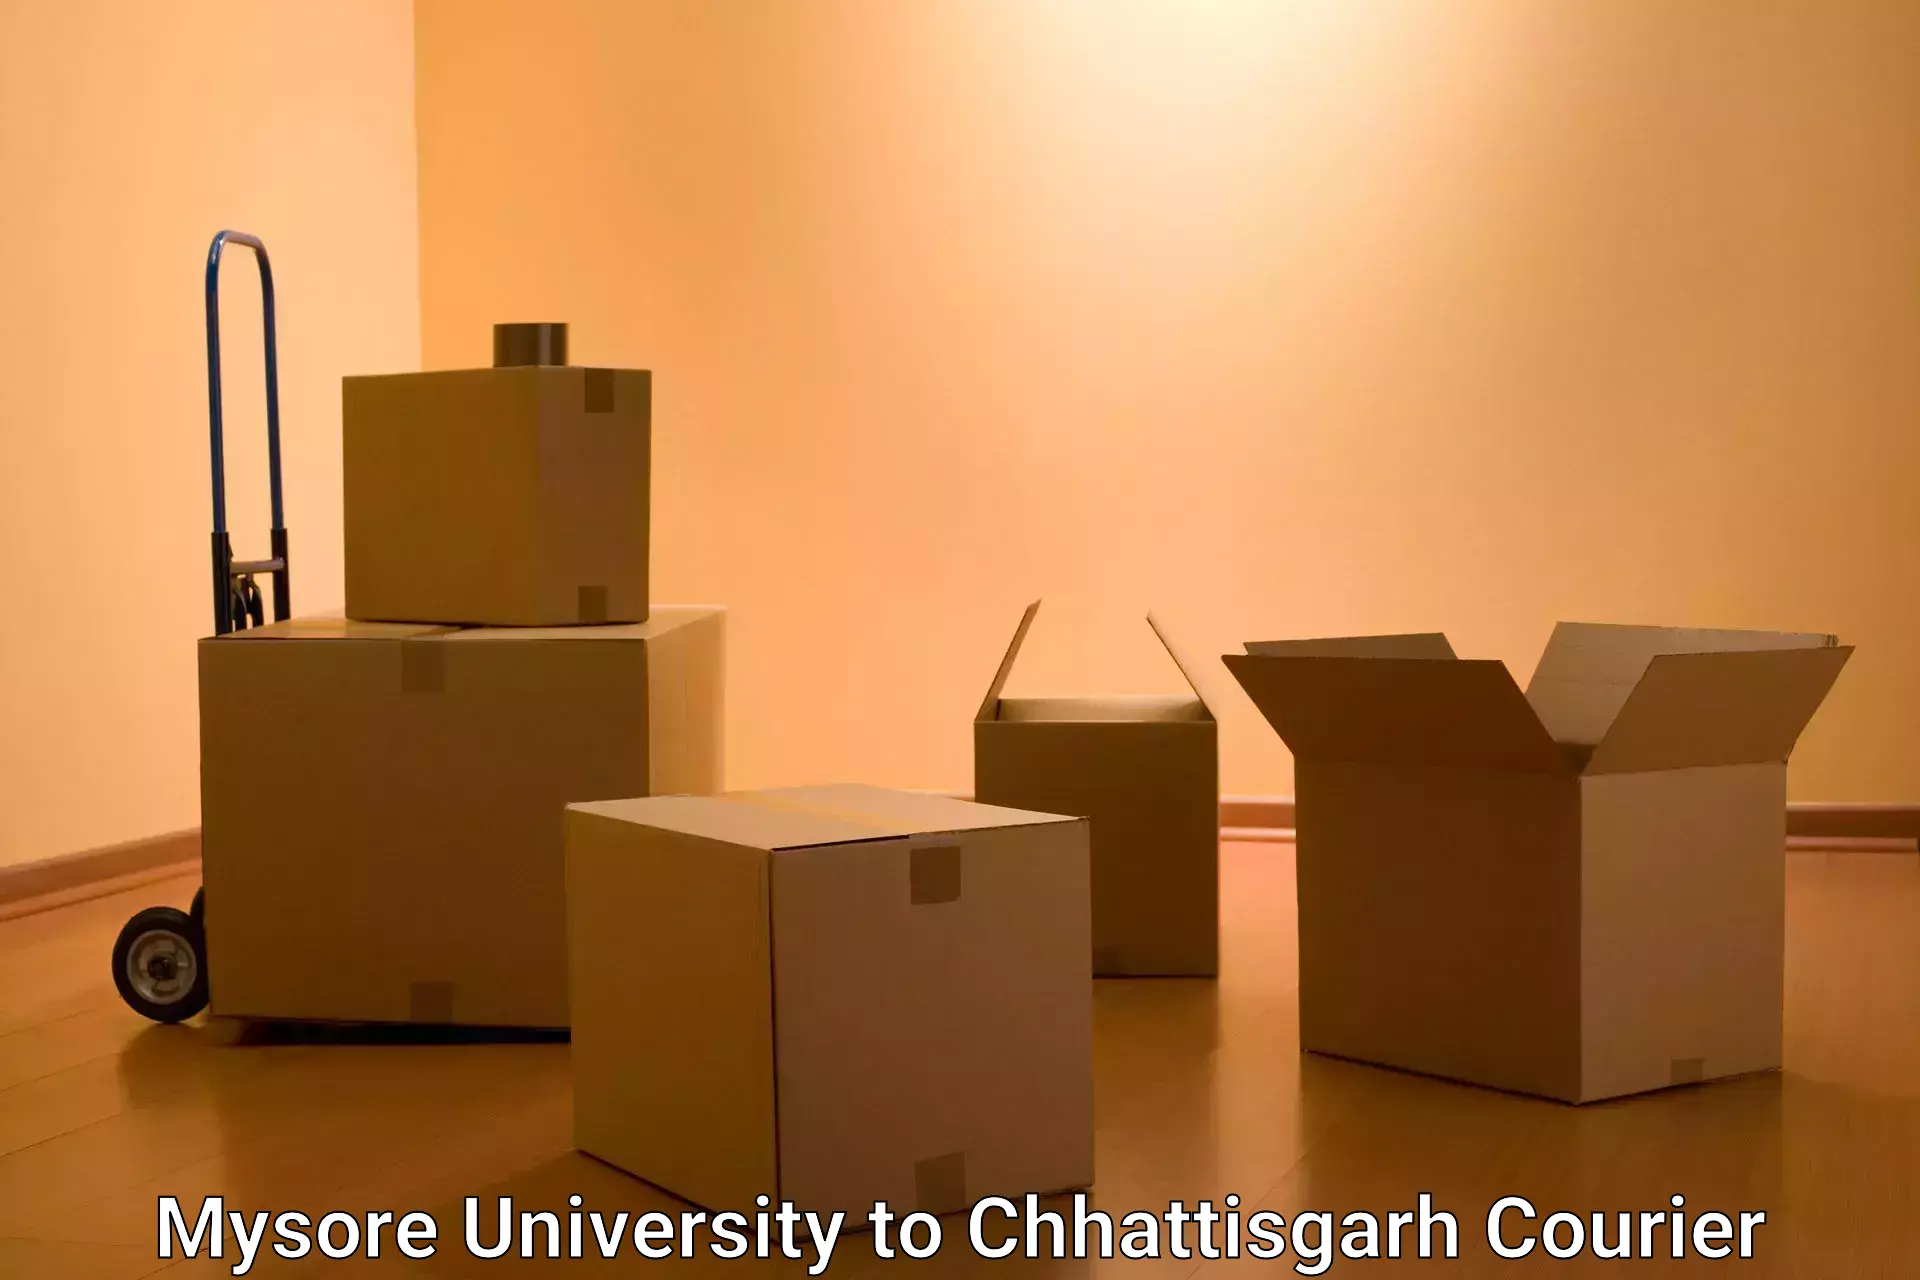 International courier networks Mysore University to Chhattisgarh